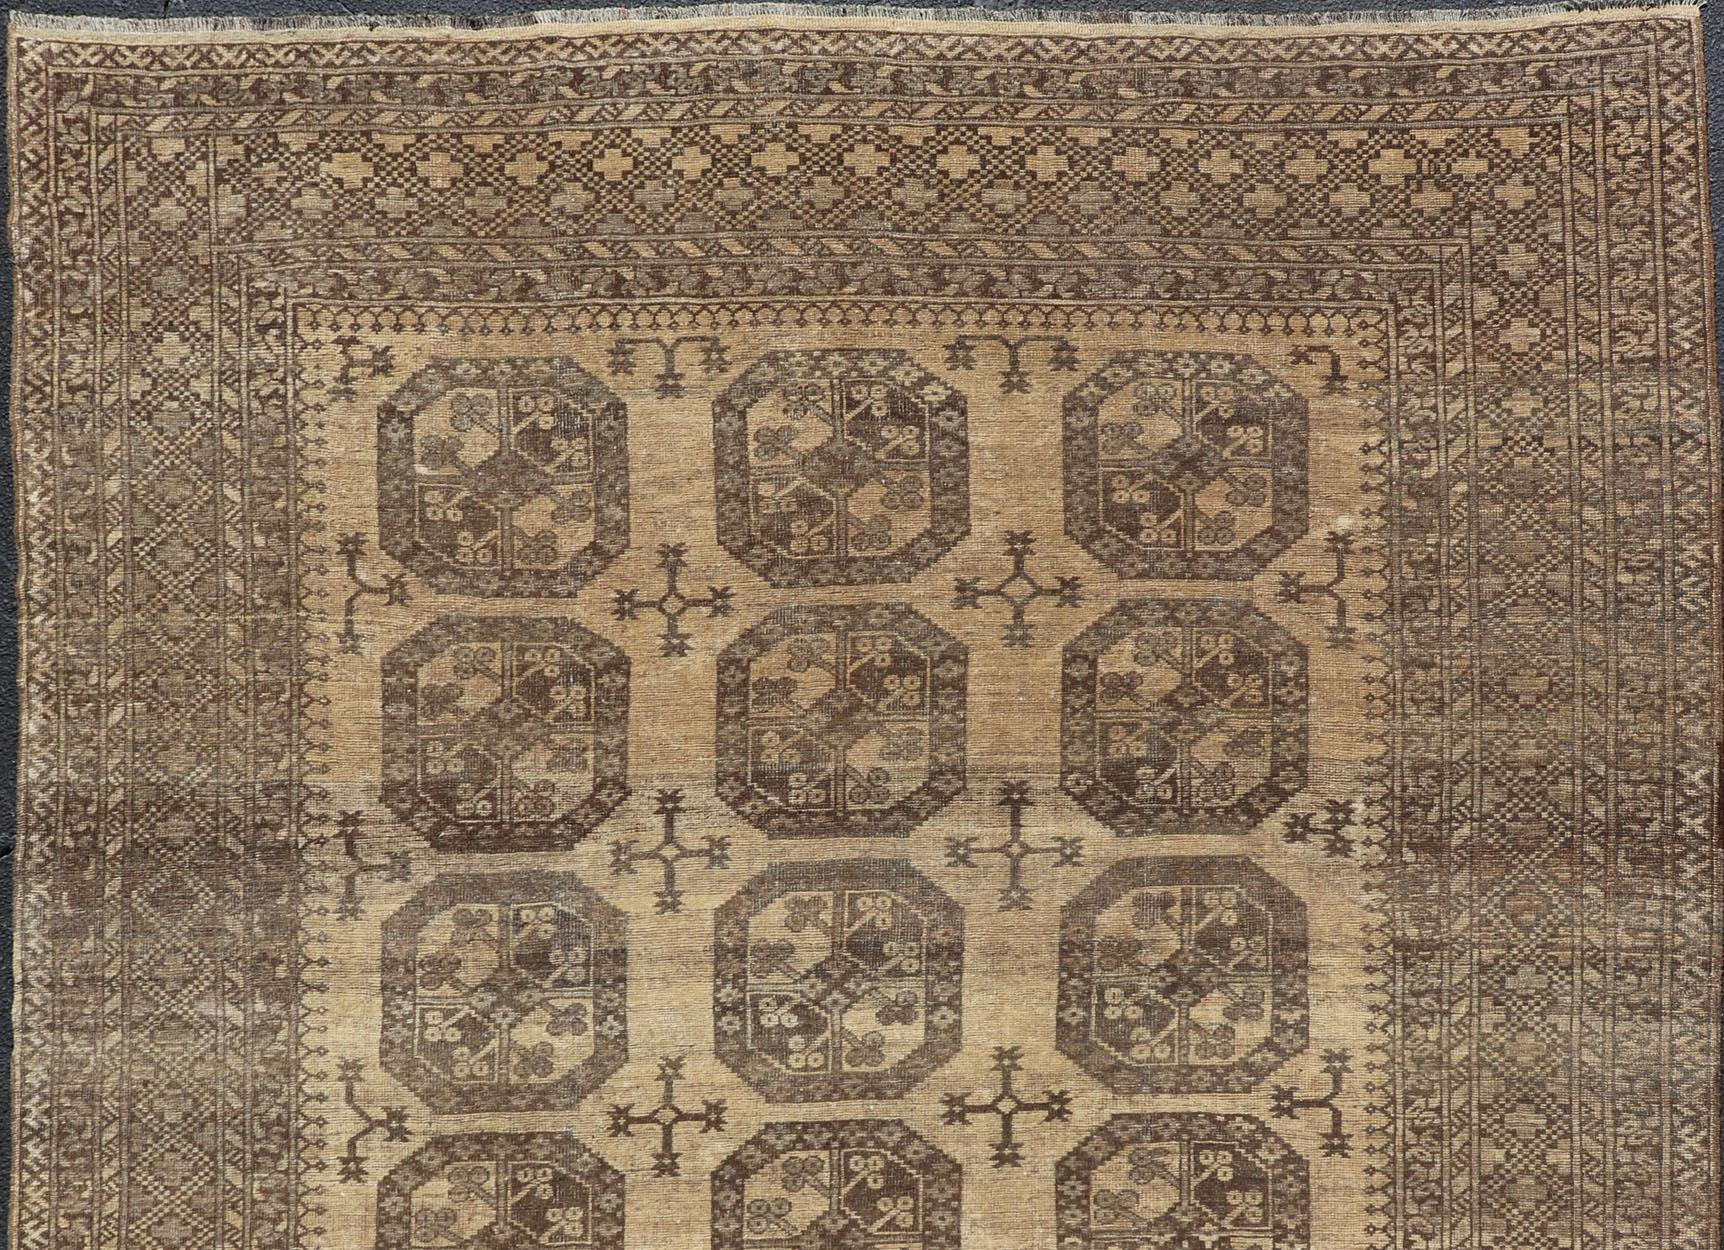 Islamic Vintage Turkomen Ersari Rug with Gul Design in Brown, Gray, Tan & Sand Colors For Sale